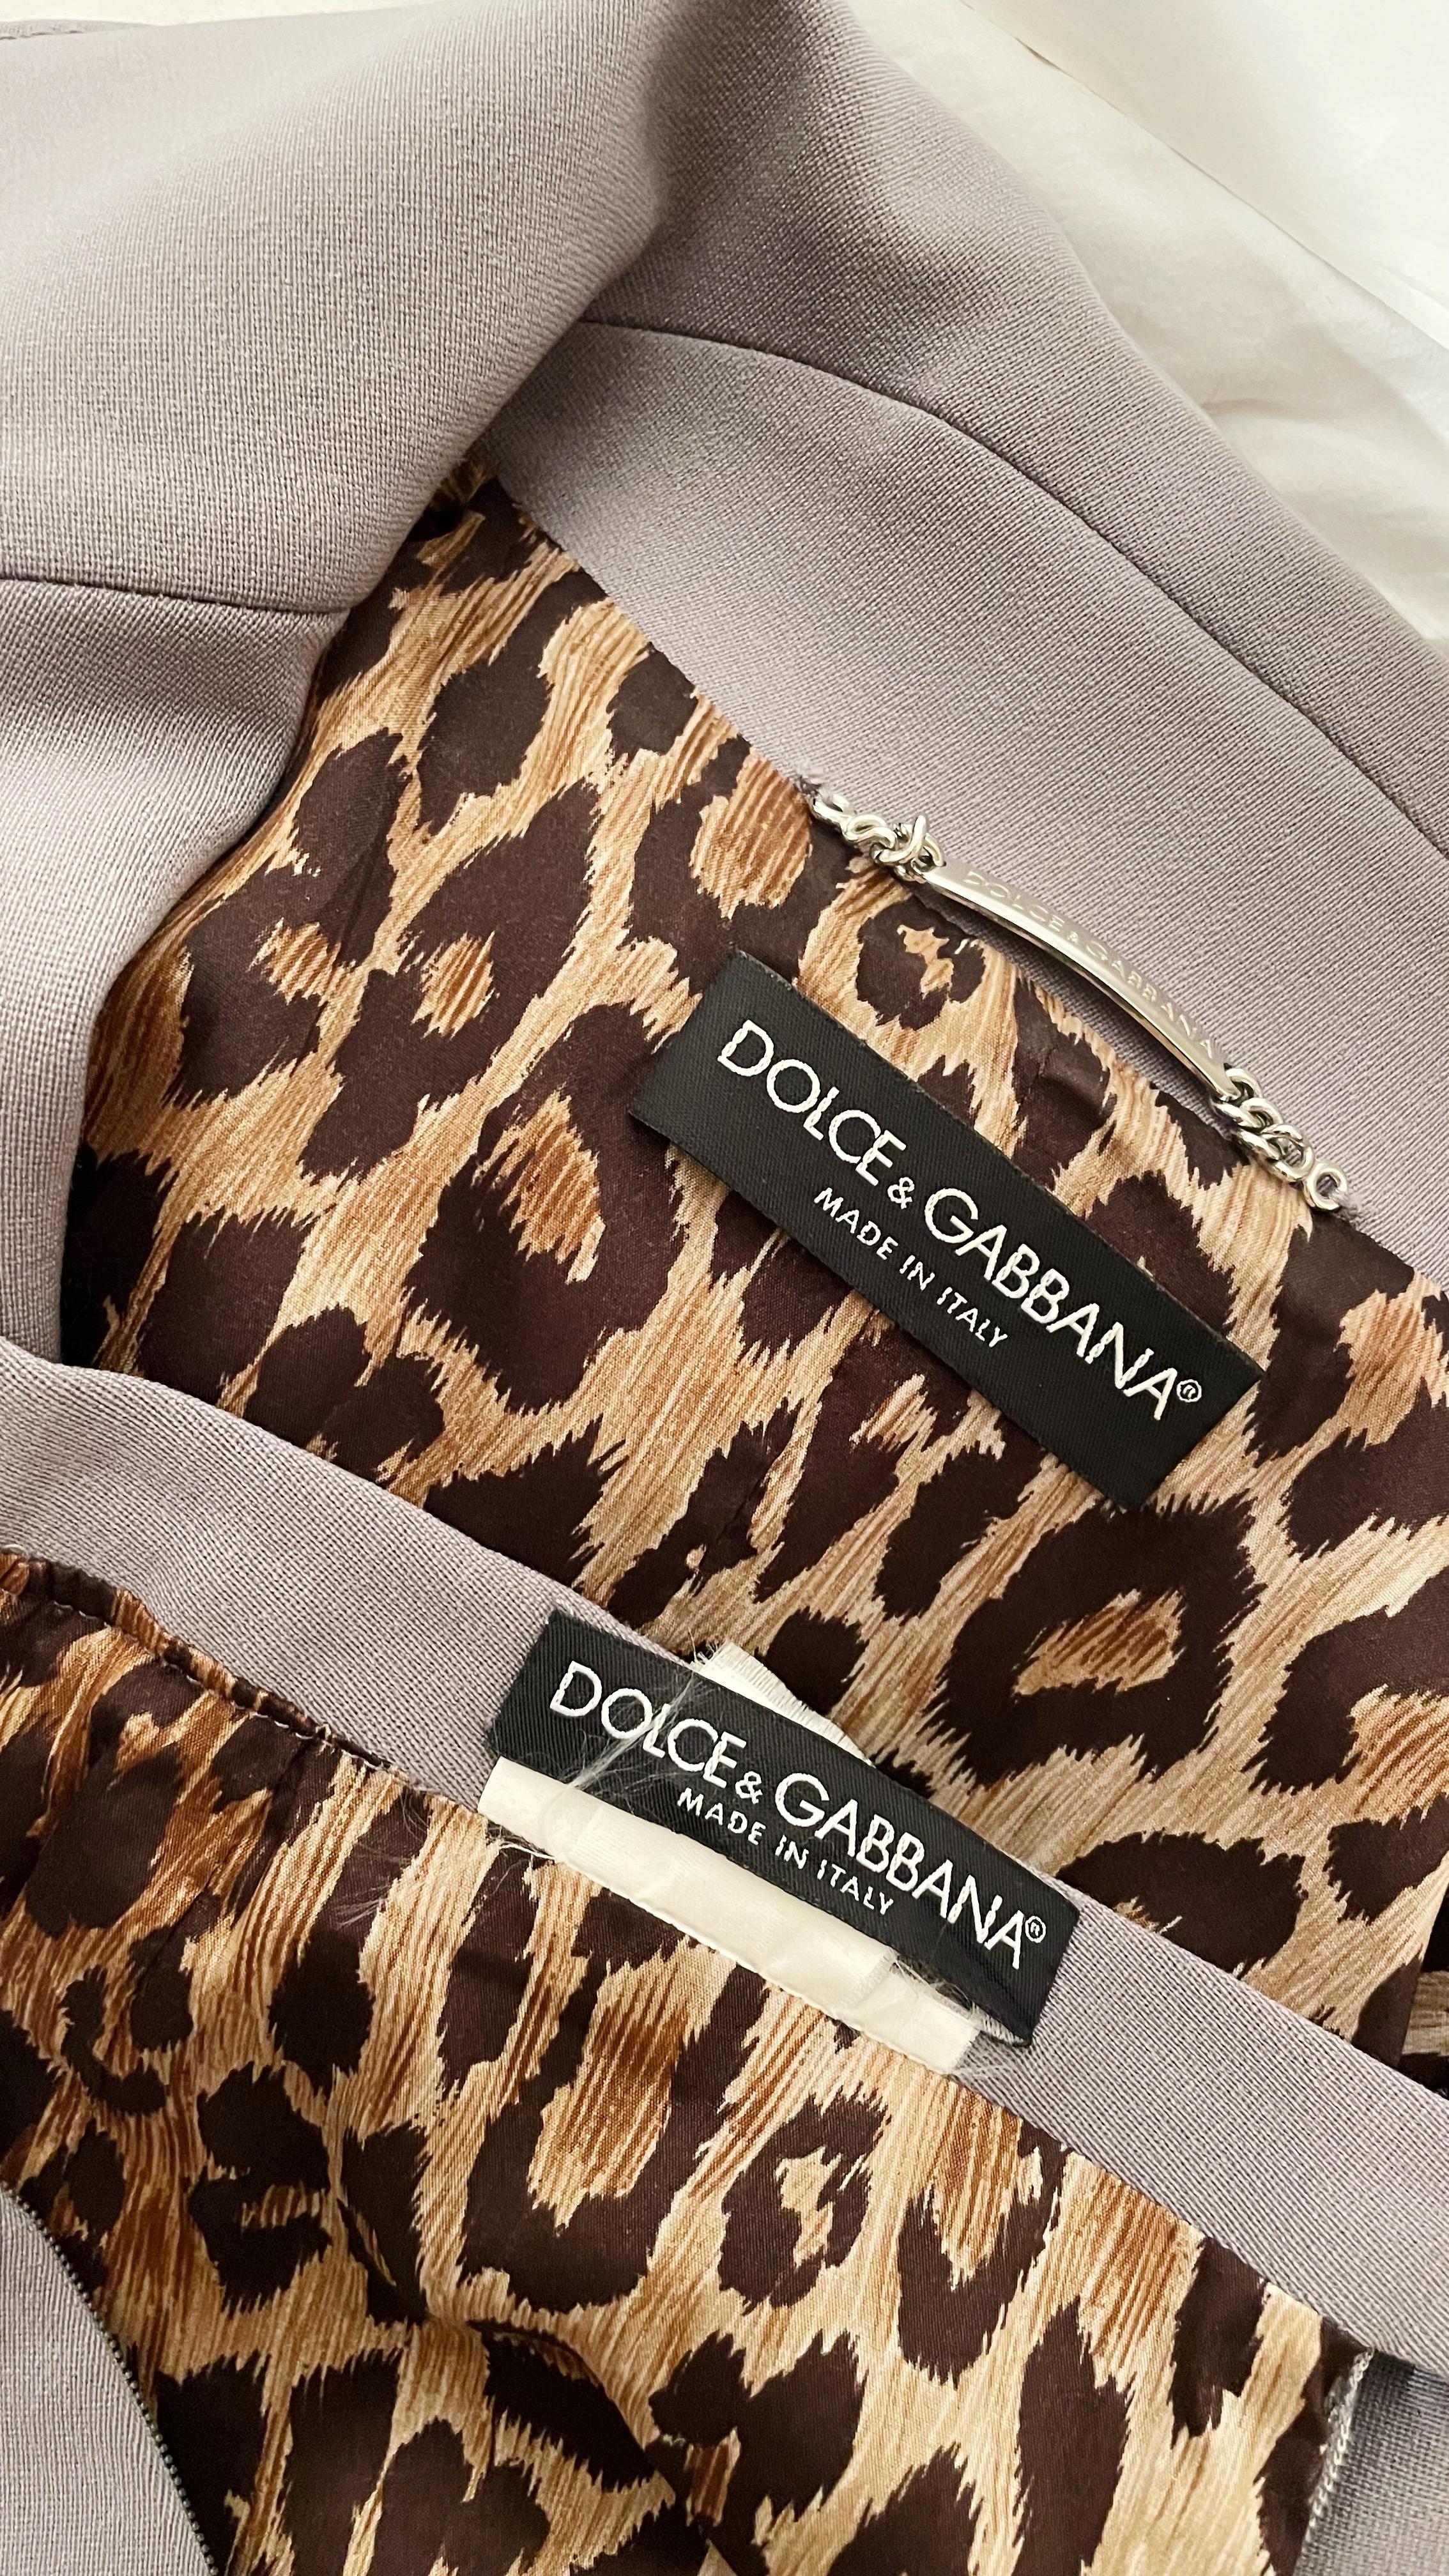 Dolce & Gabbana Corset Skirt Suit For Sale 3